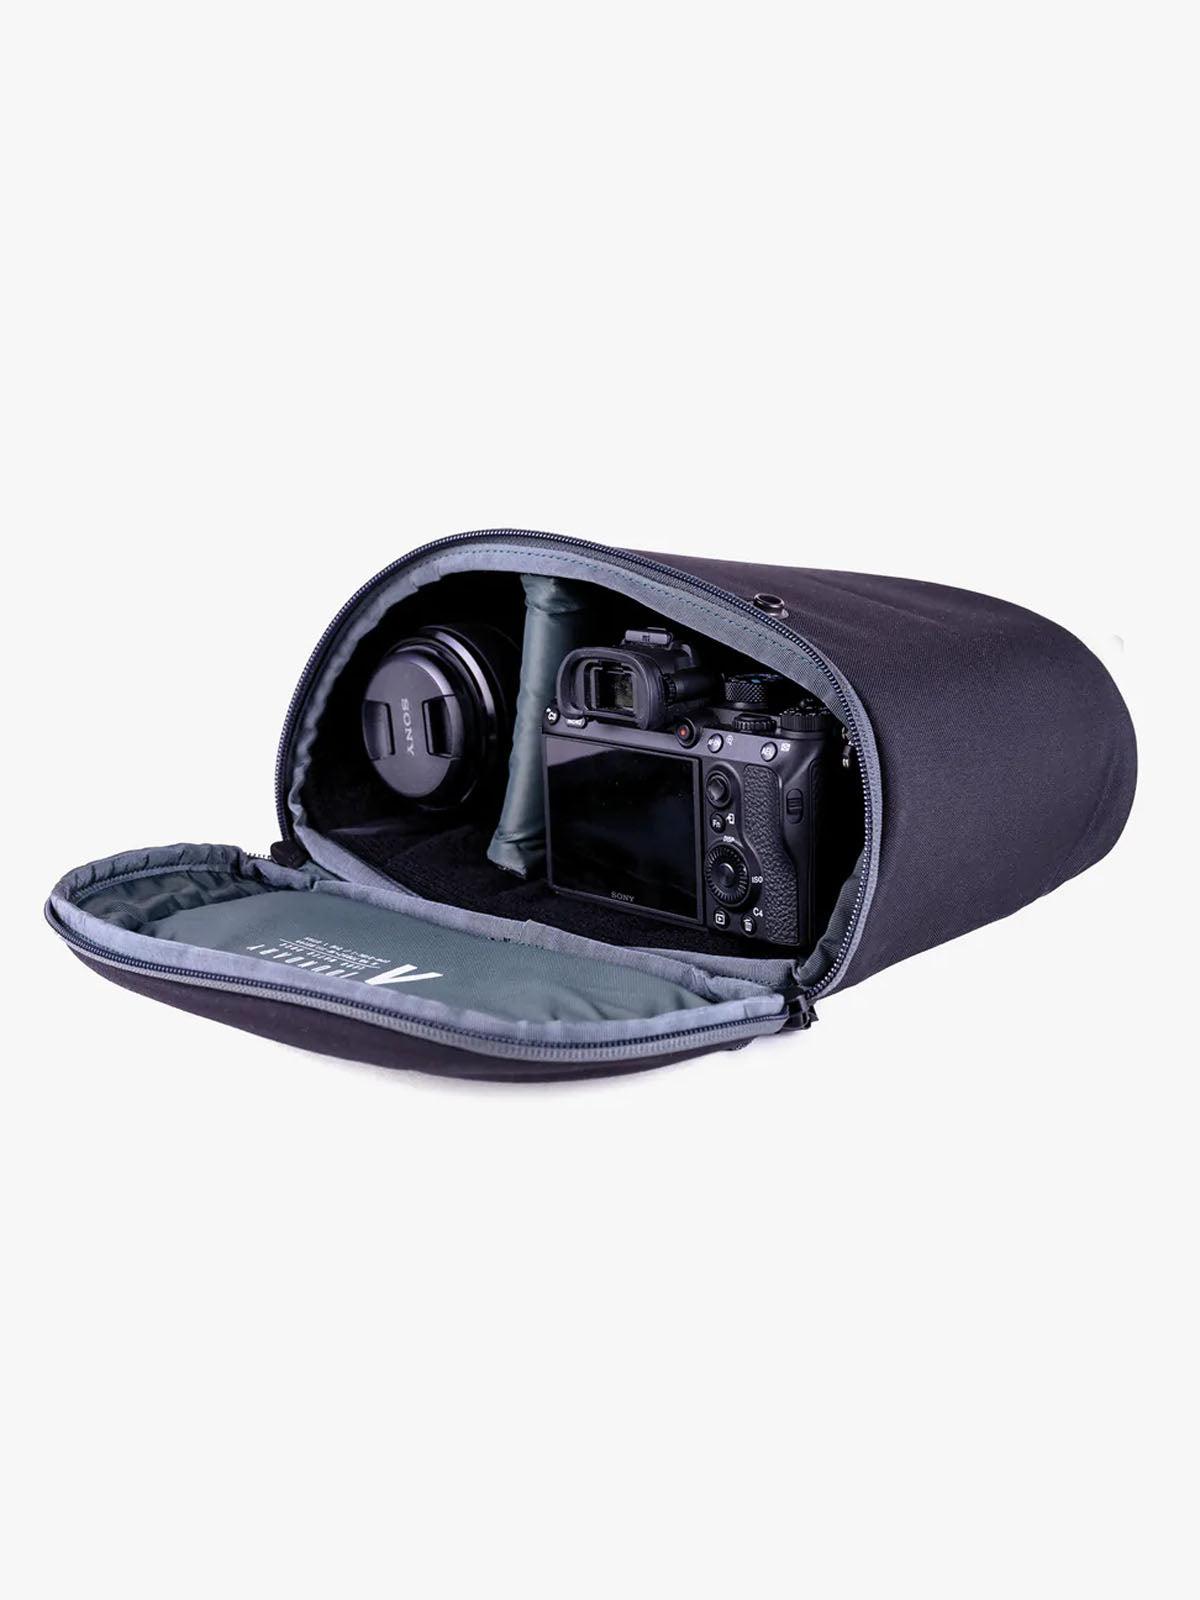 Boundary Supply CB-1 Camera Case Black